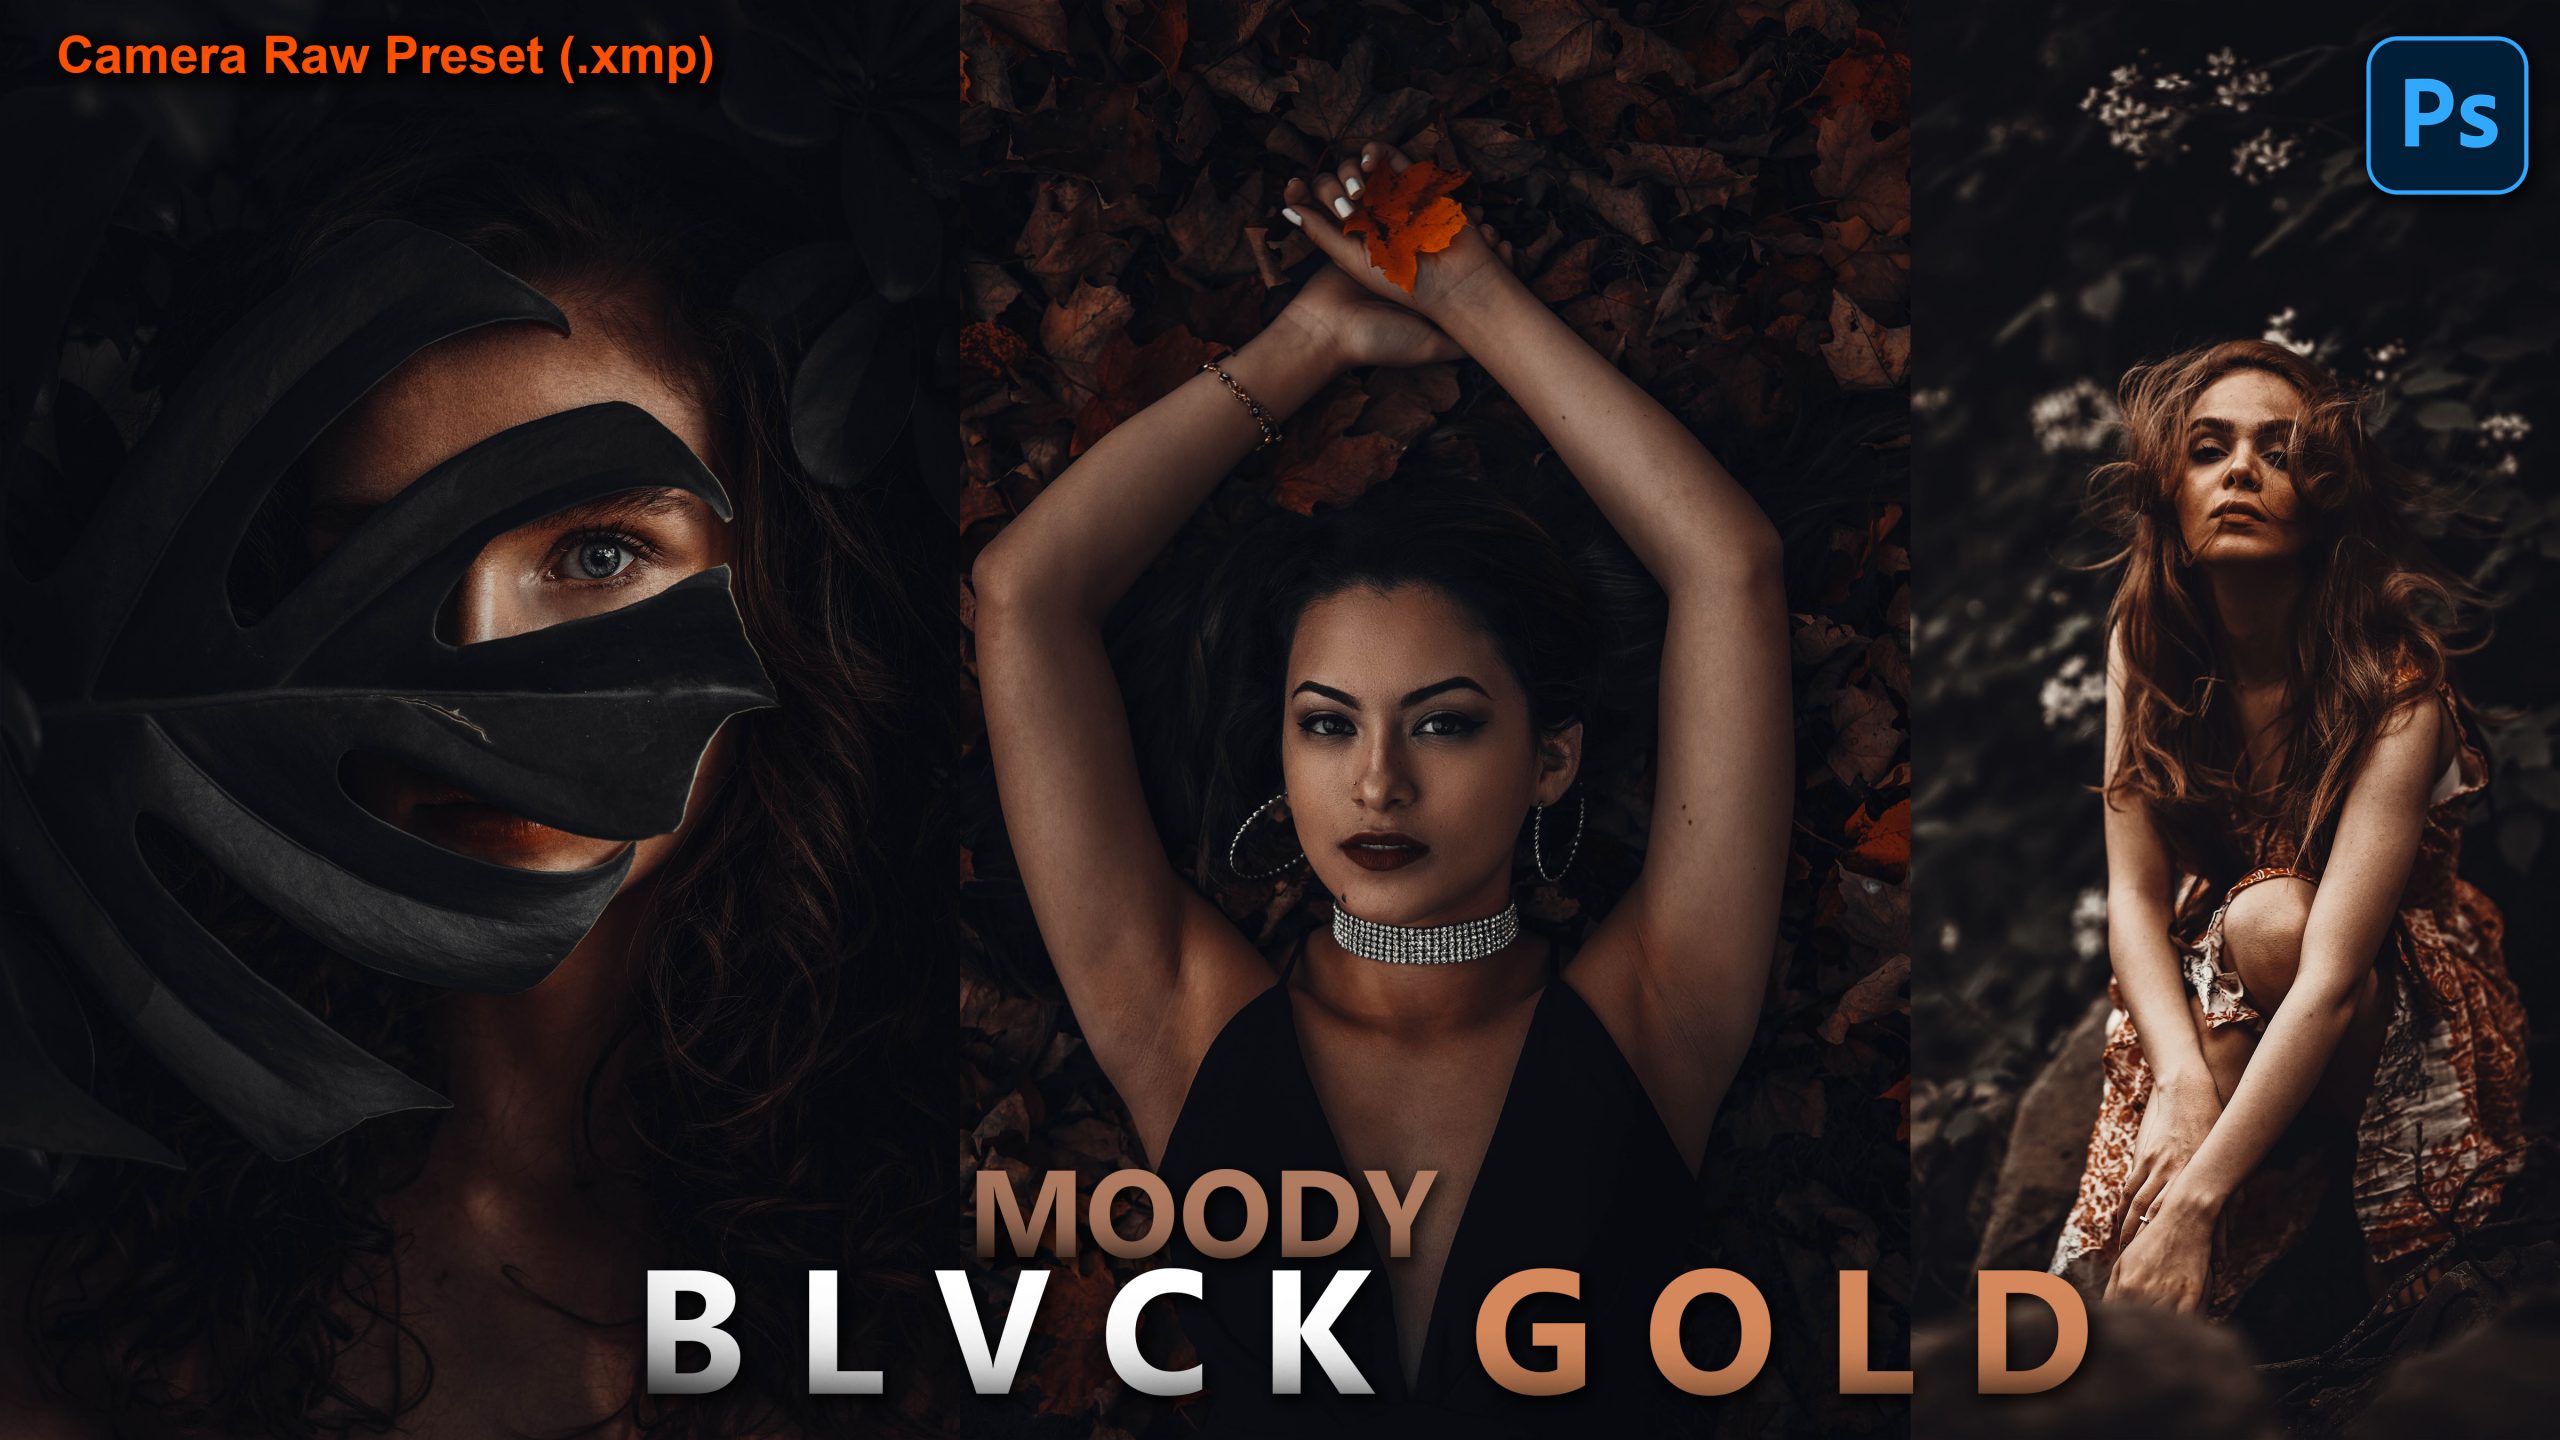 Download Free Moody Blvck Gold Camera Raw Presets Of Moody Blvck Gold Photoshop Preset Of How To Edit Like Moody Blvck Gold Filterpreset Com